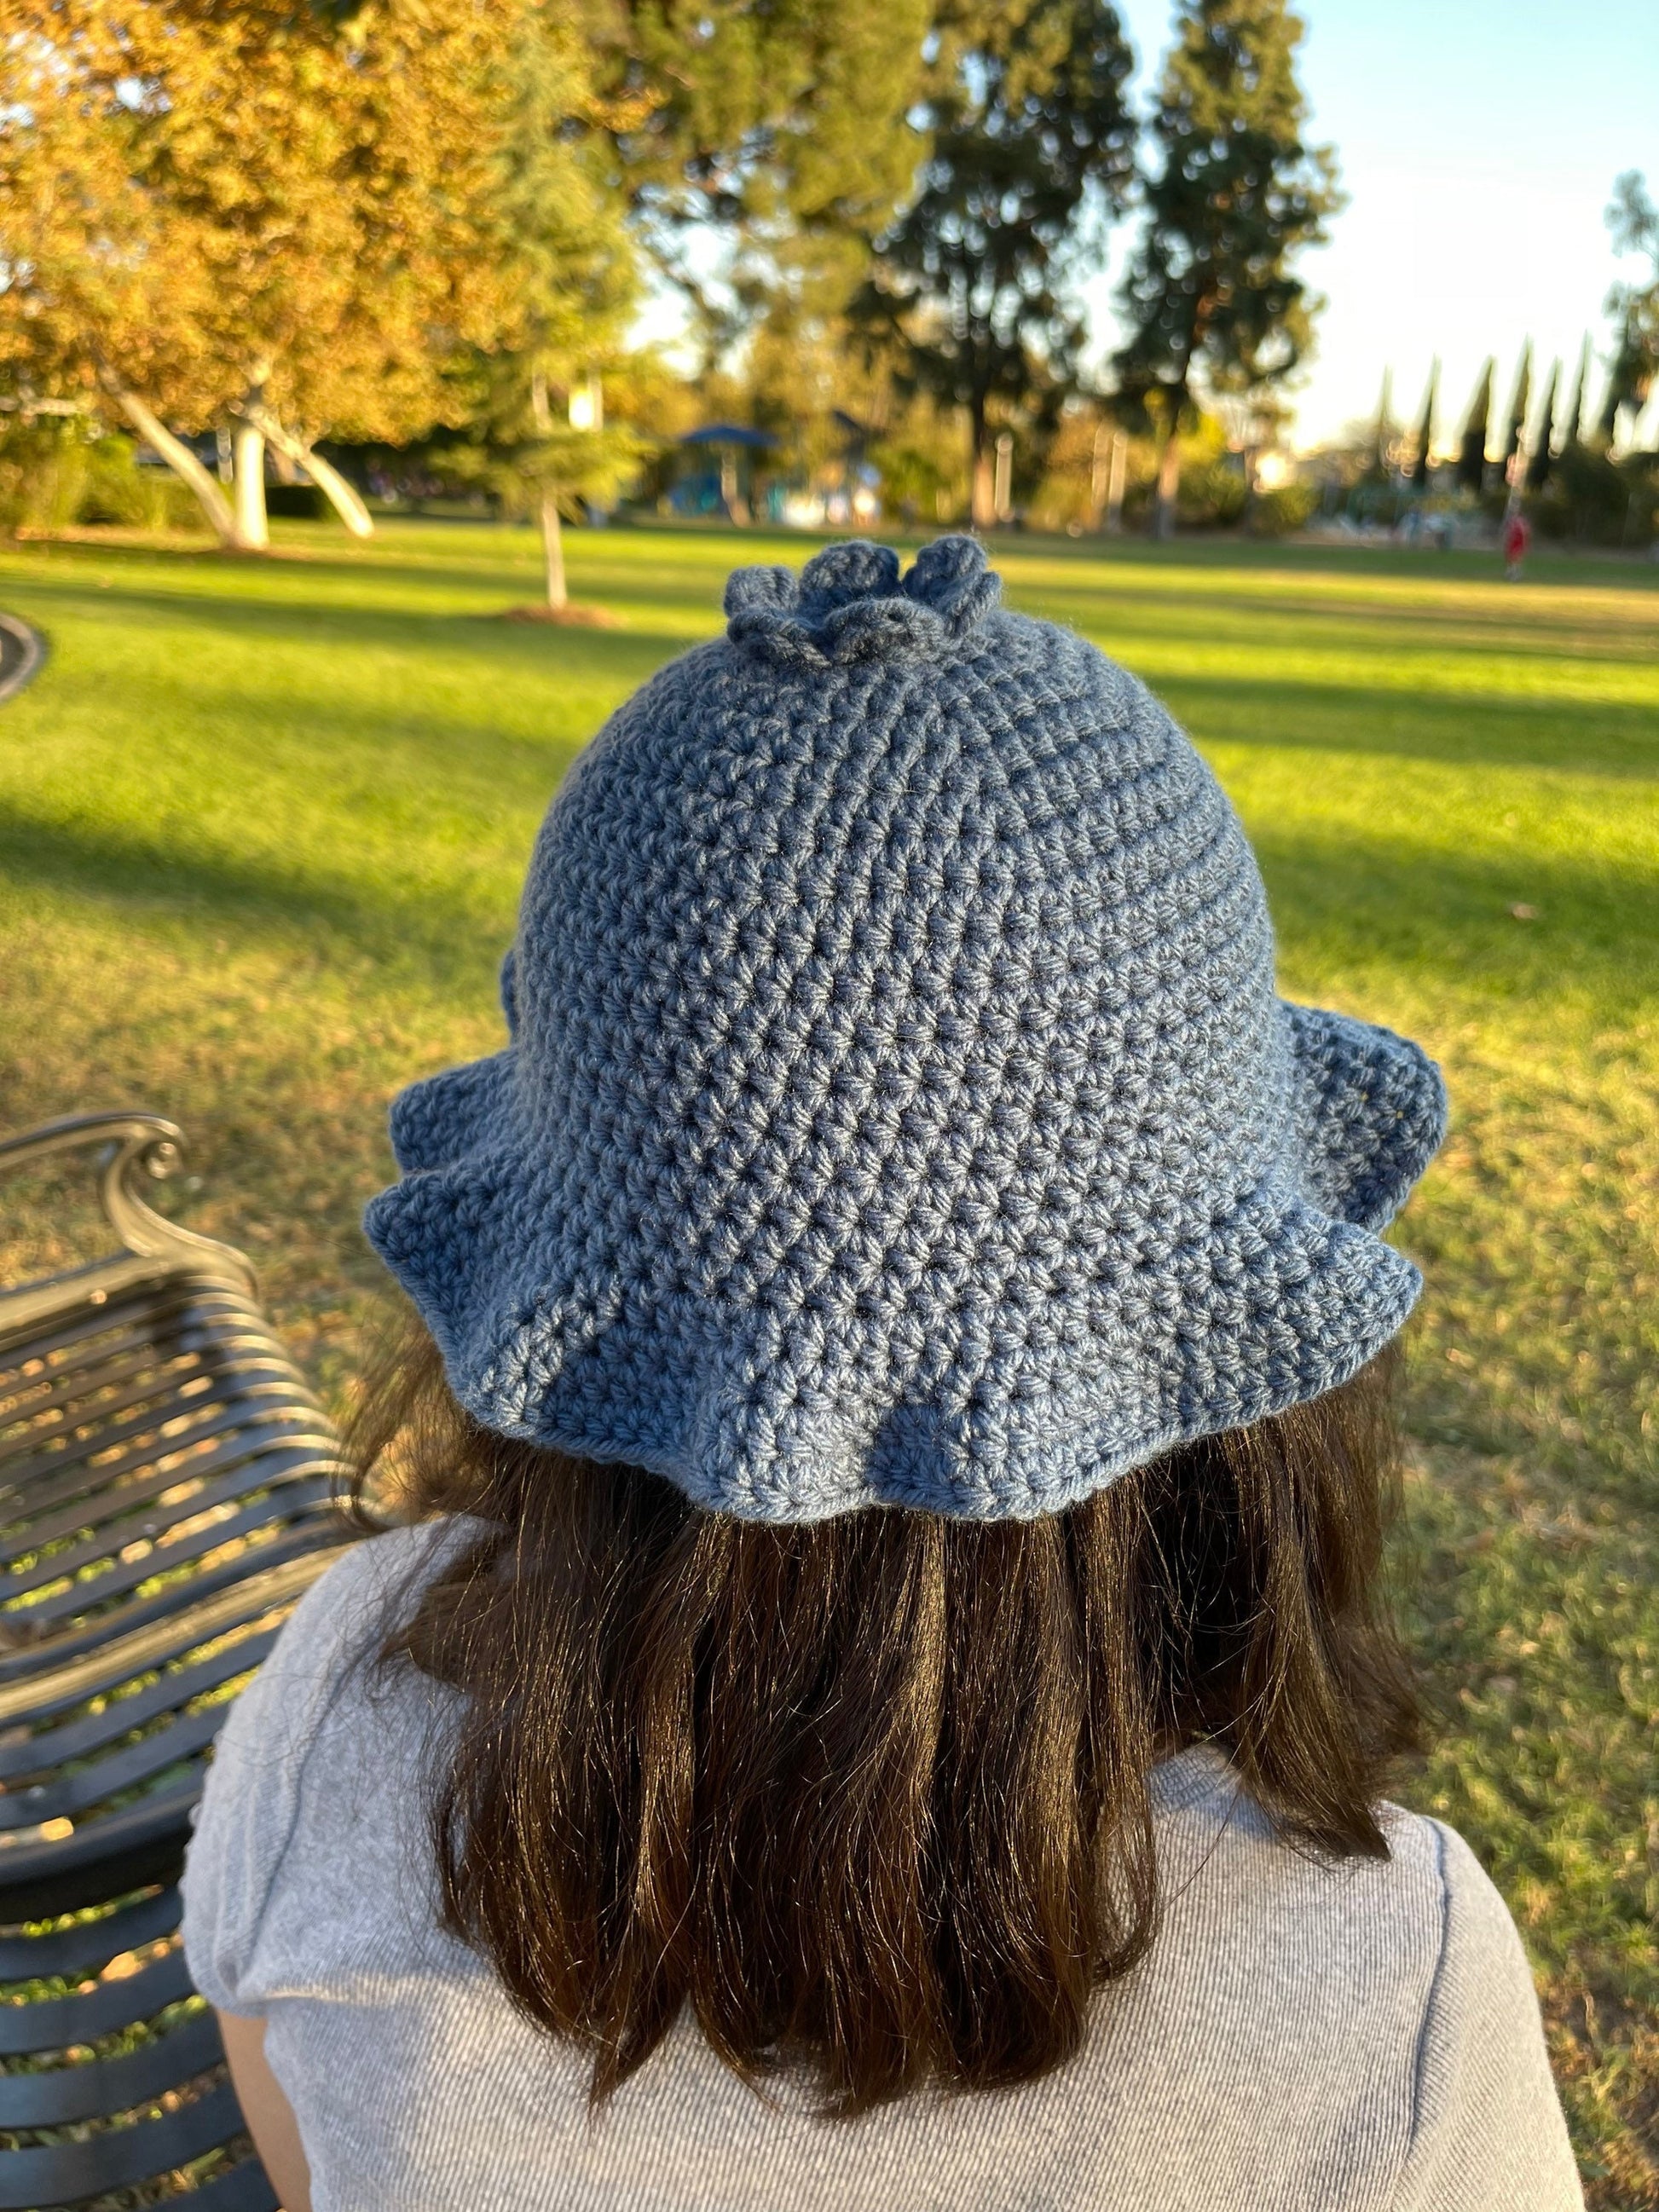 Crochet Blueberry Hat Pattern – Julivia